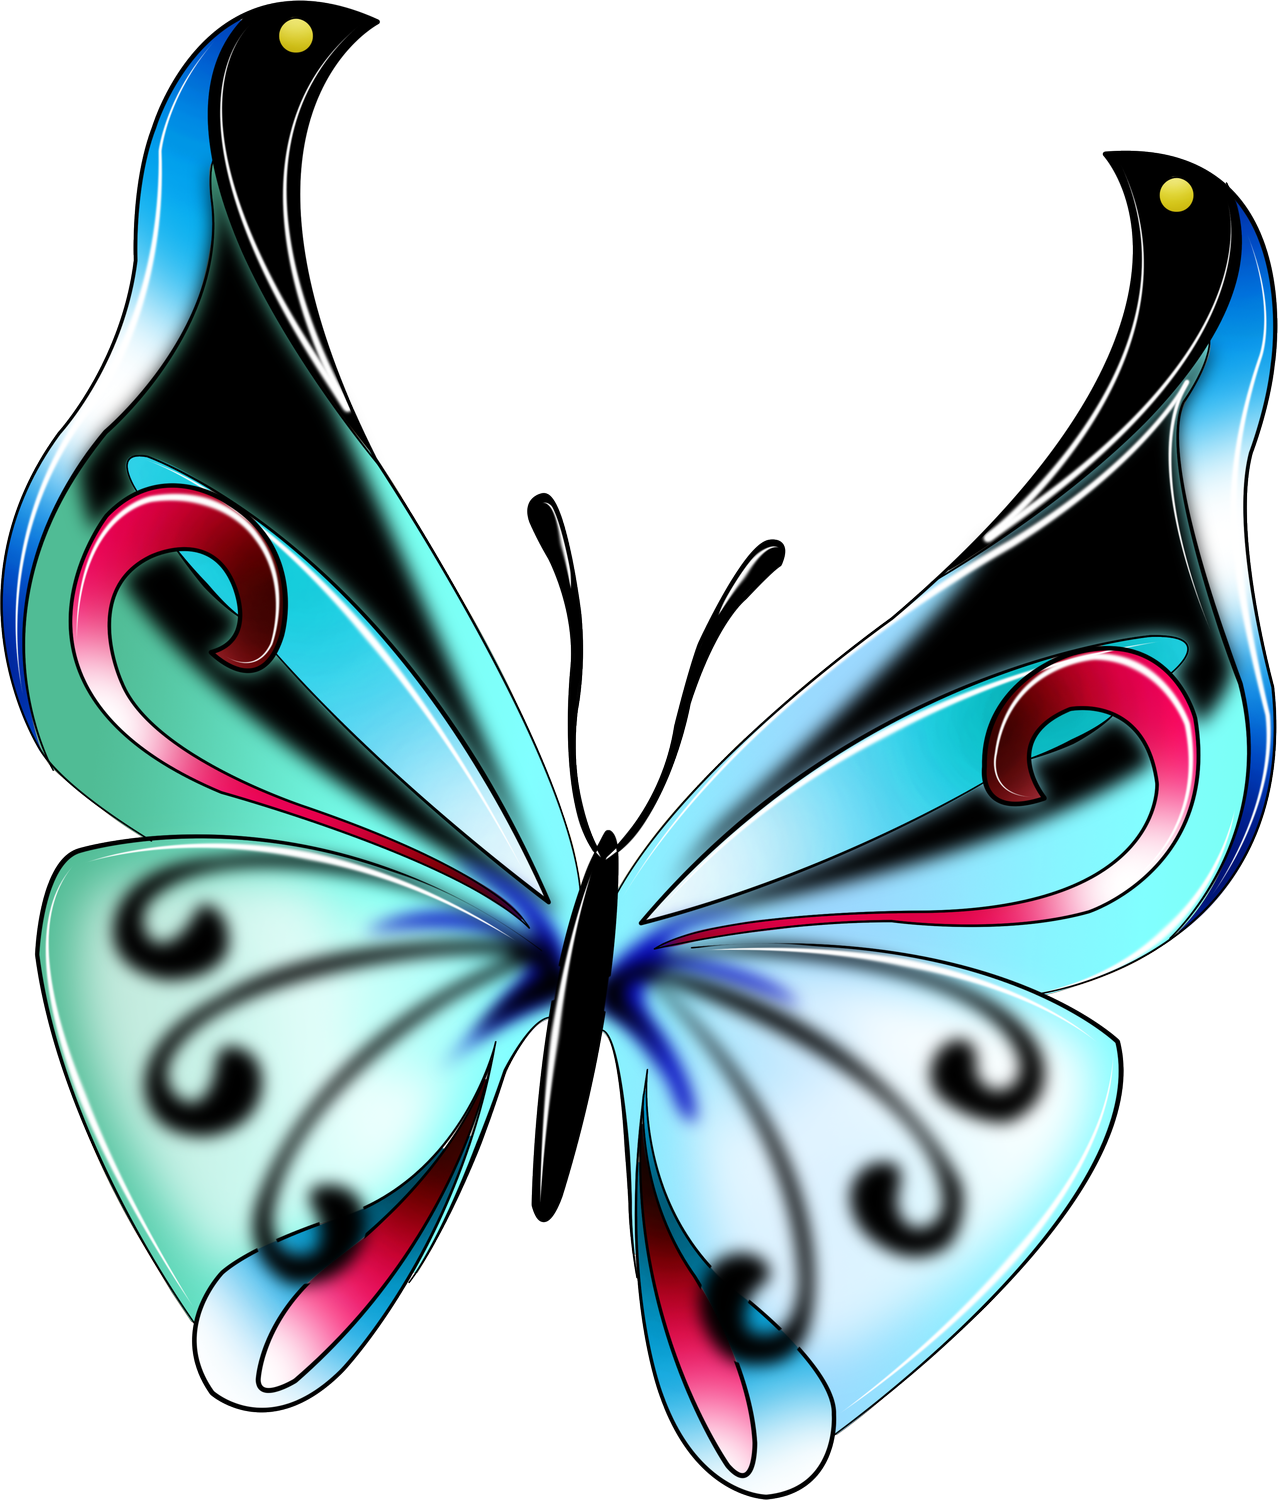 Клипарт прозрачные картинки. Бабочка рисунок. Красивая бабочка рисунок. Красивые бабочки на прозрачном фоне. Сказочные бабочки на прозрачном фоне.